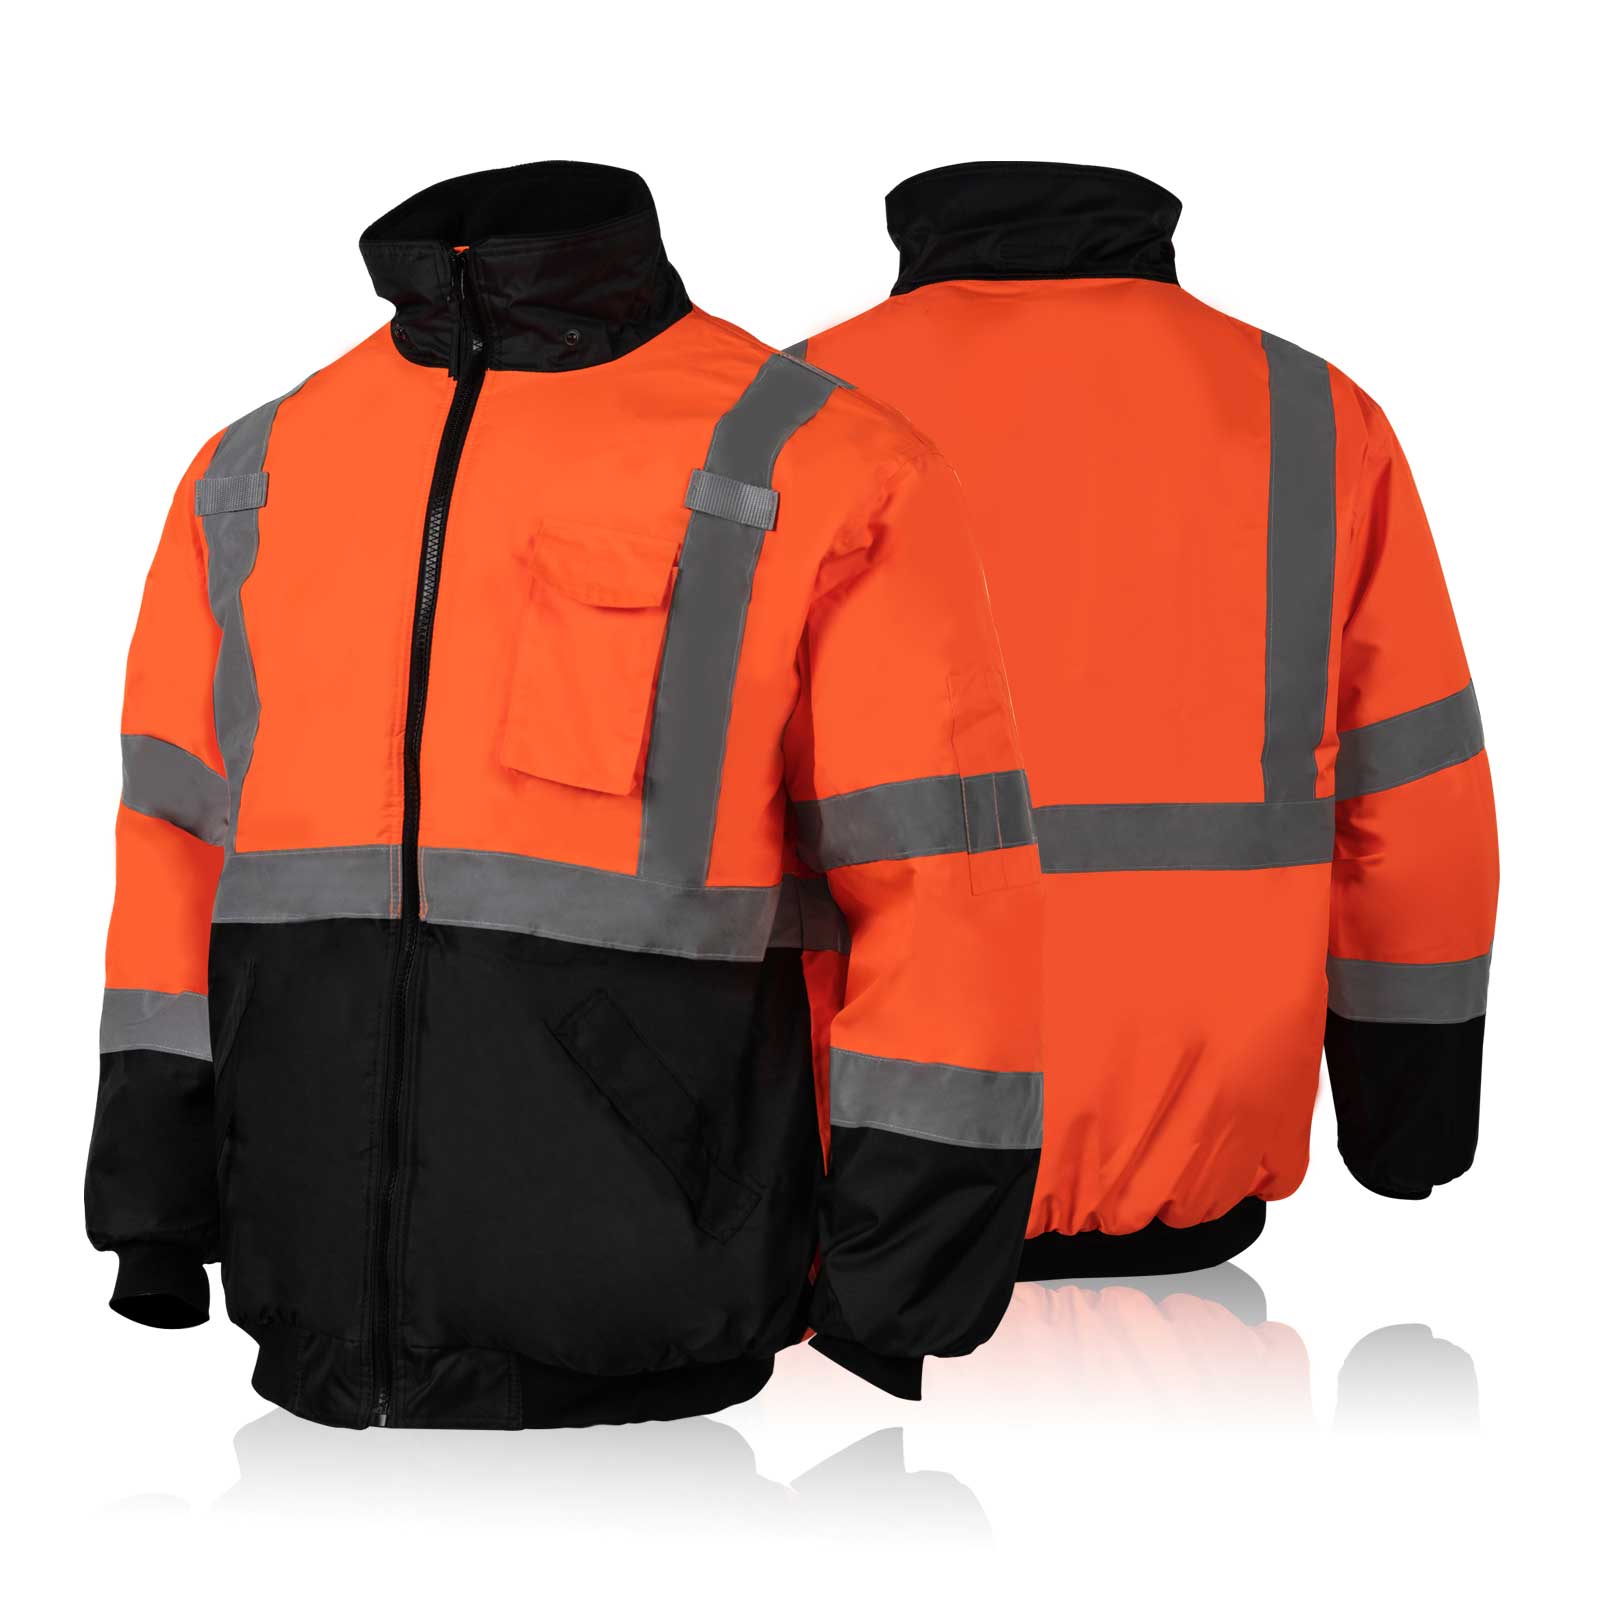 FONIRRA High Visibility Reflective Jackets for Men, Hi Vis Waterproof Class 3 Safety Jackets, Work Construction Bomber Coats (Yellow,3XL)